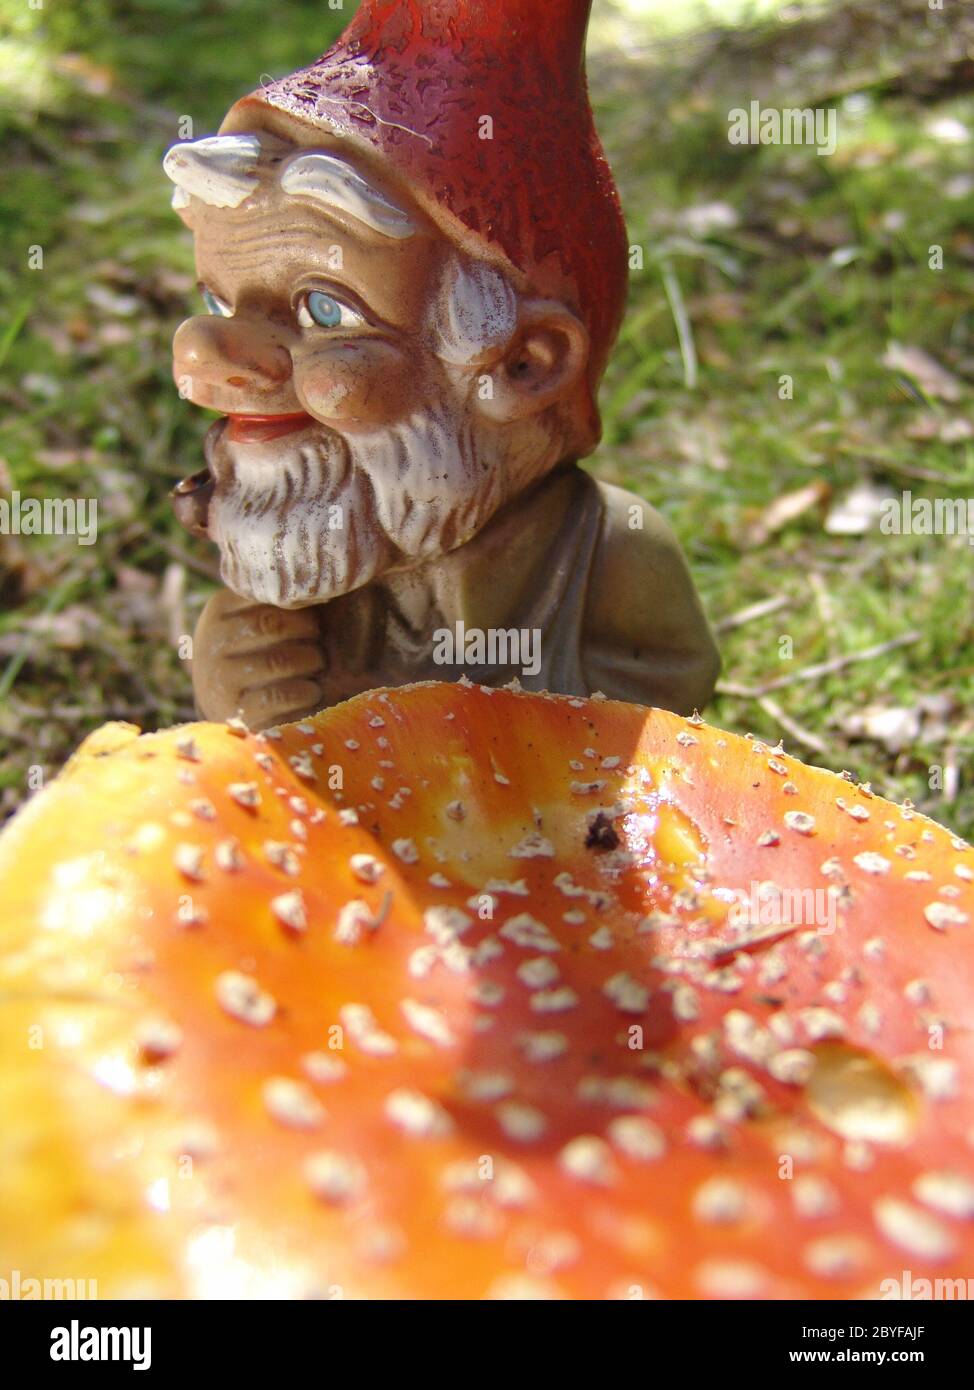 Garden gnome and mushrooms Stock Photo